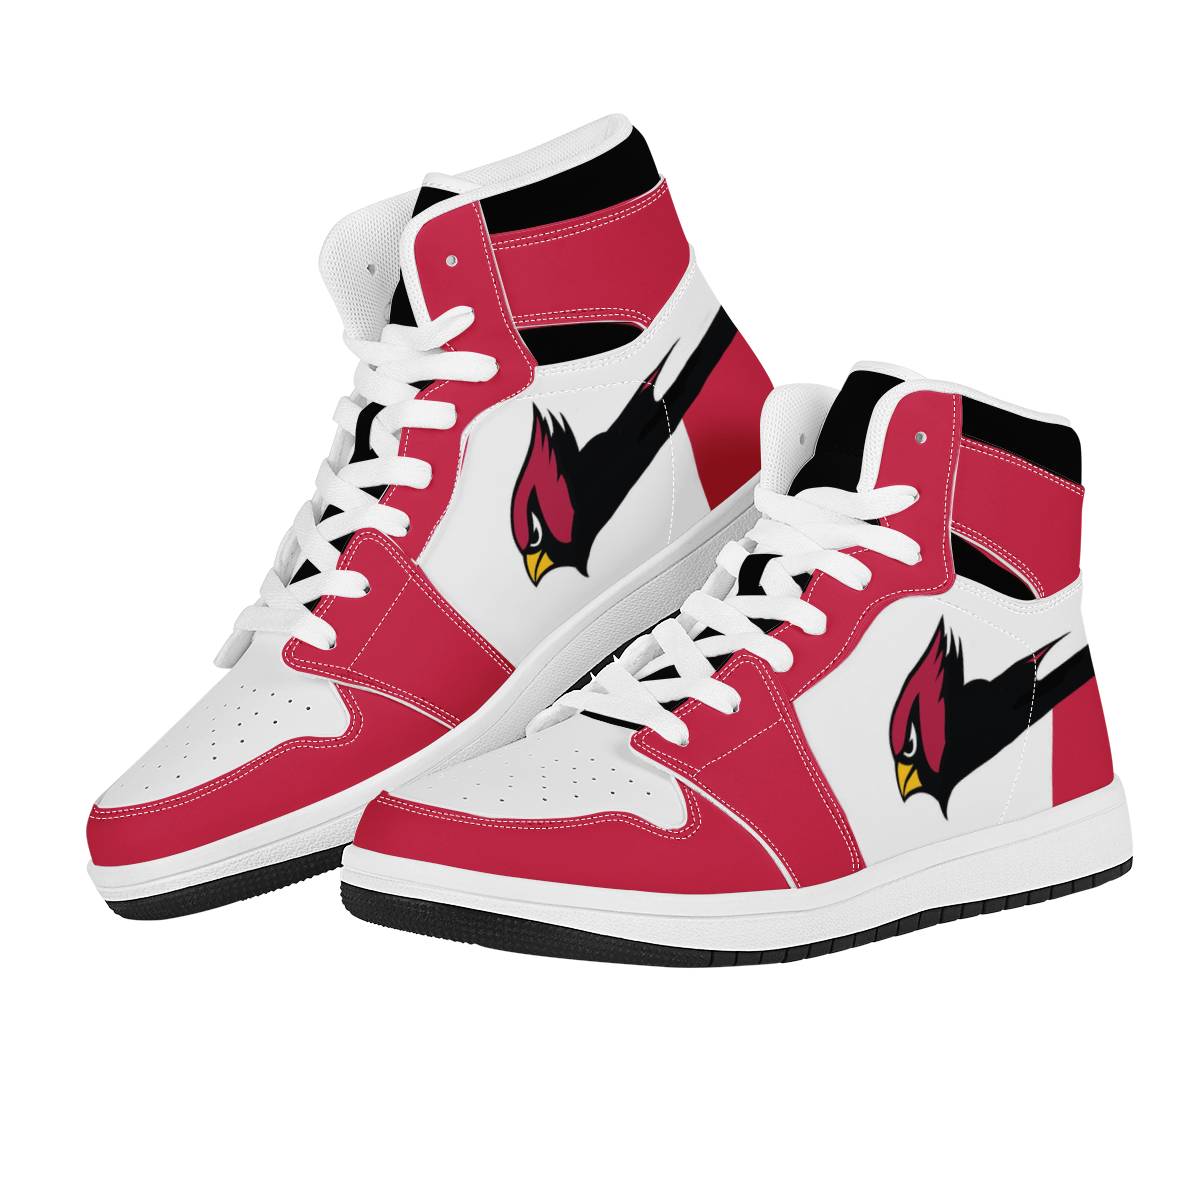 Women's Arizona Cardinals High Top Leather AJ1 Sneakers 001